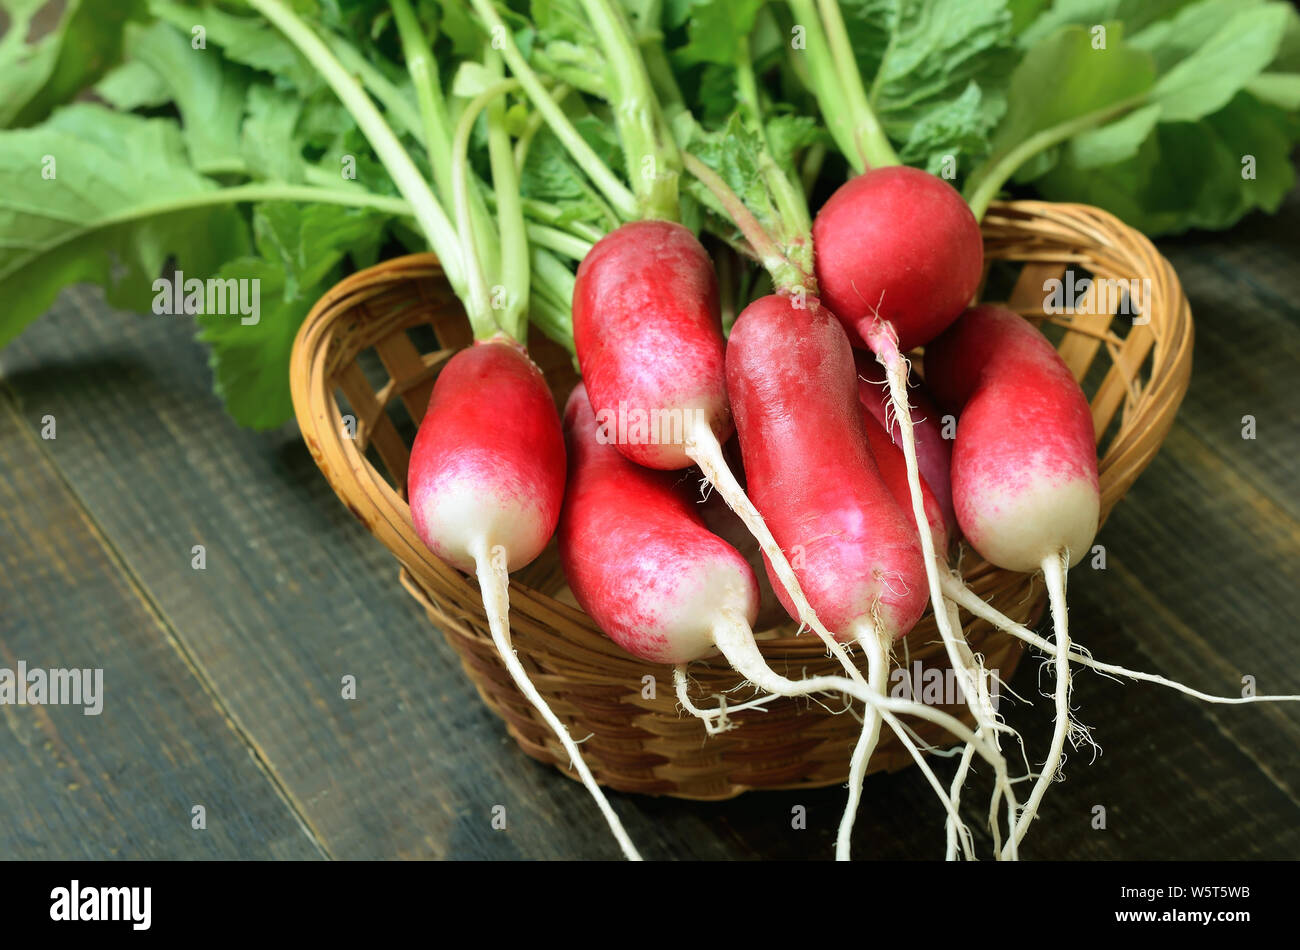 Fresh radish in basket on wooden table Stock Photo